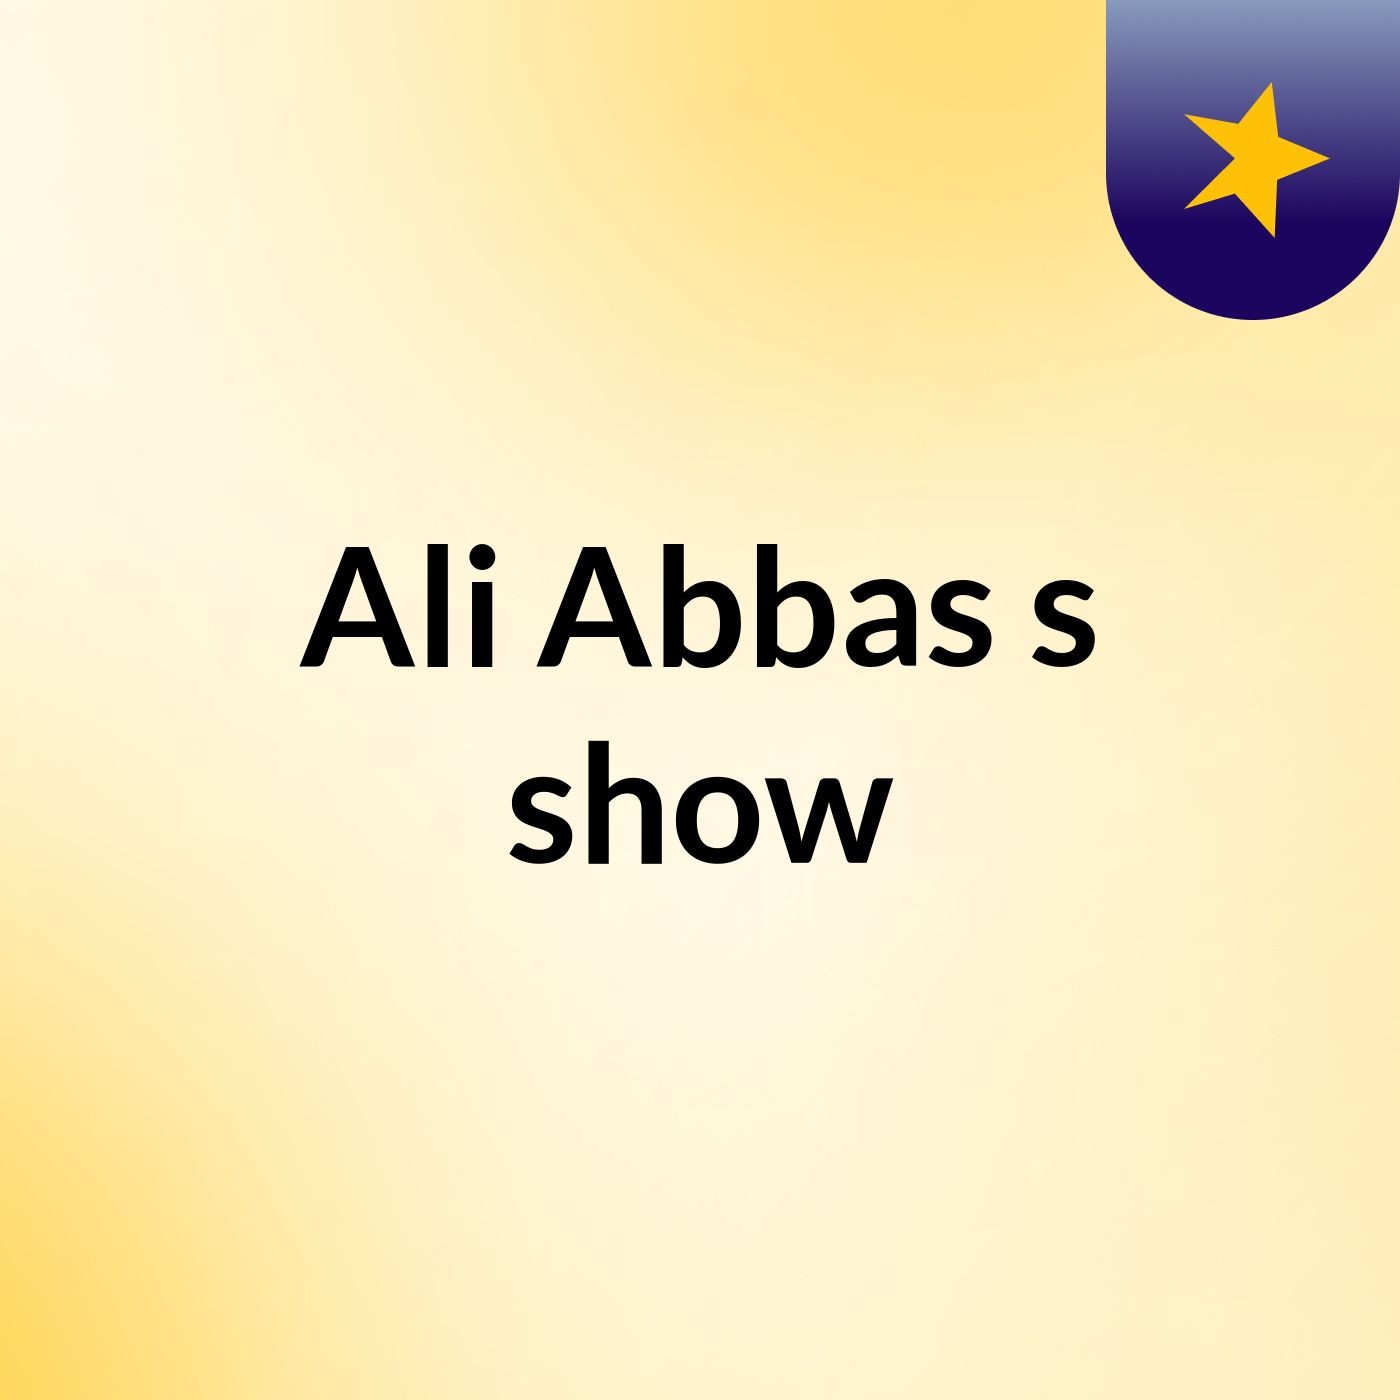 Ali Abbas's show